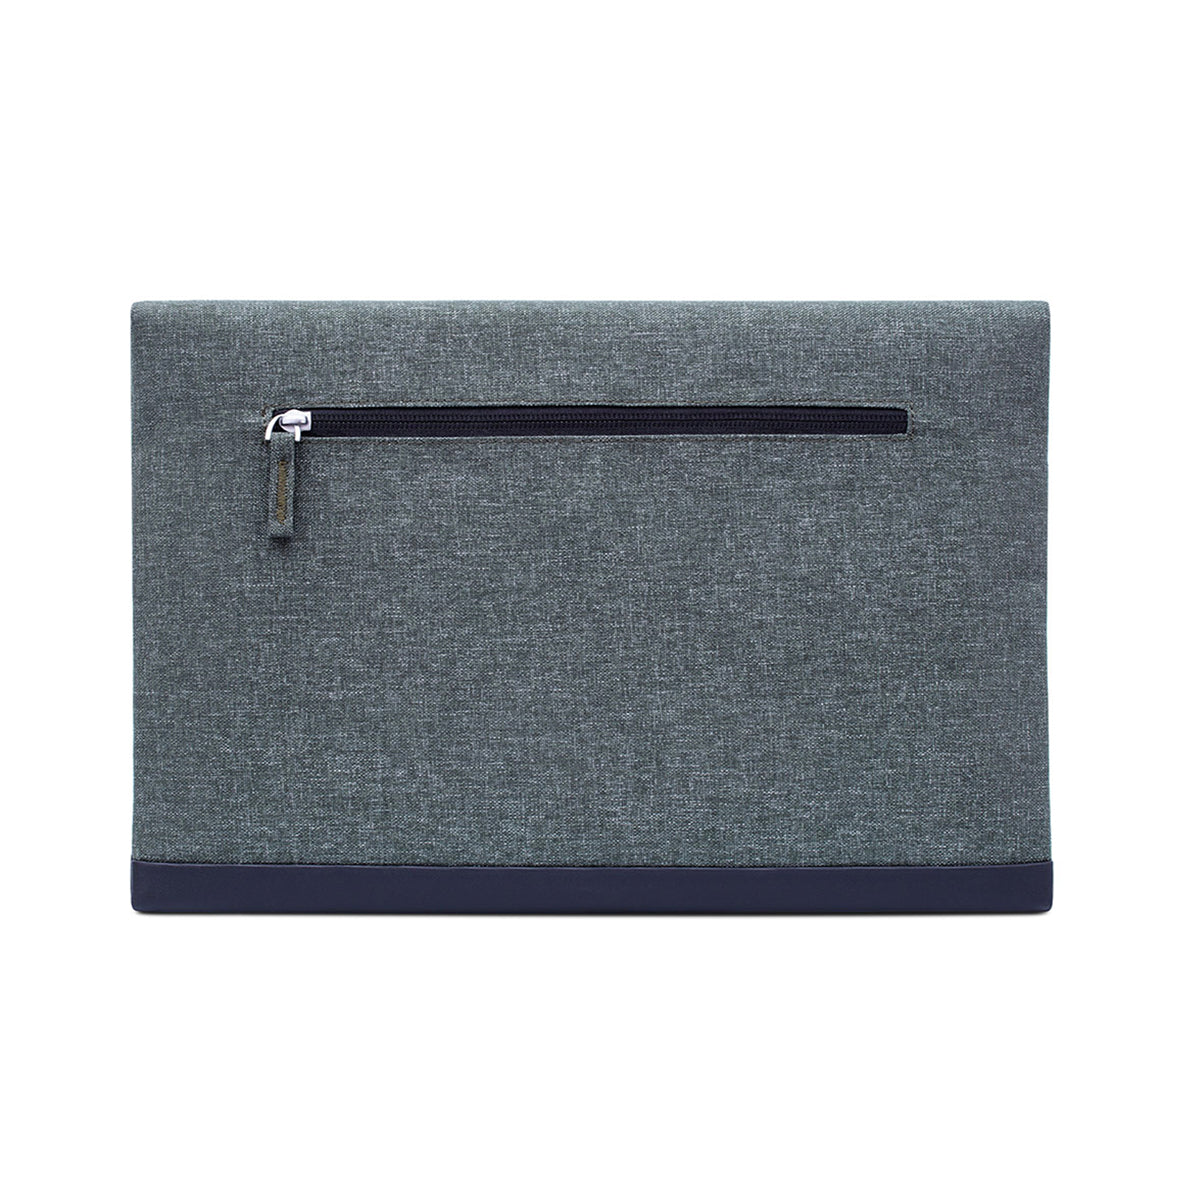 RIVACASE 8803 Lantau Laptop Sleeves 14/13 - Khaki Melange